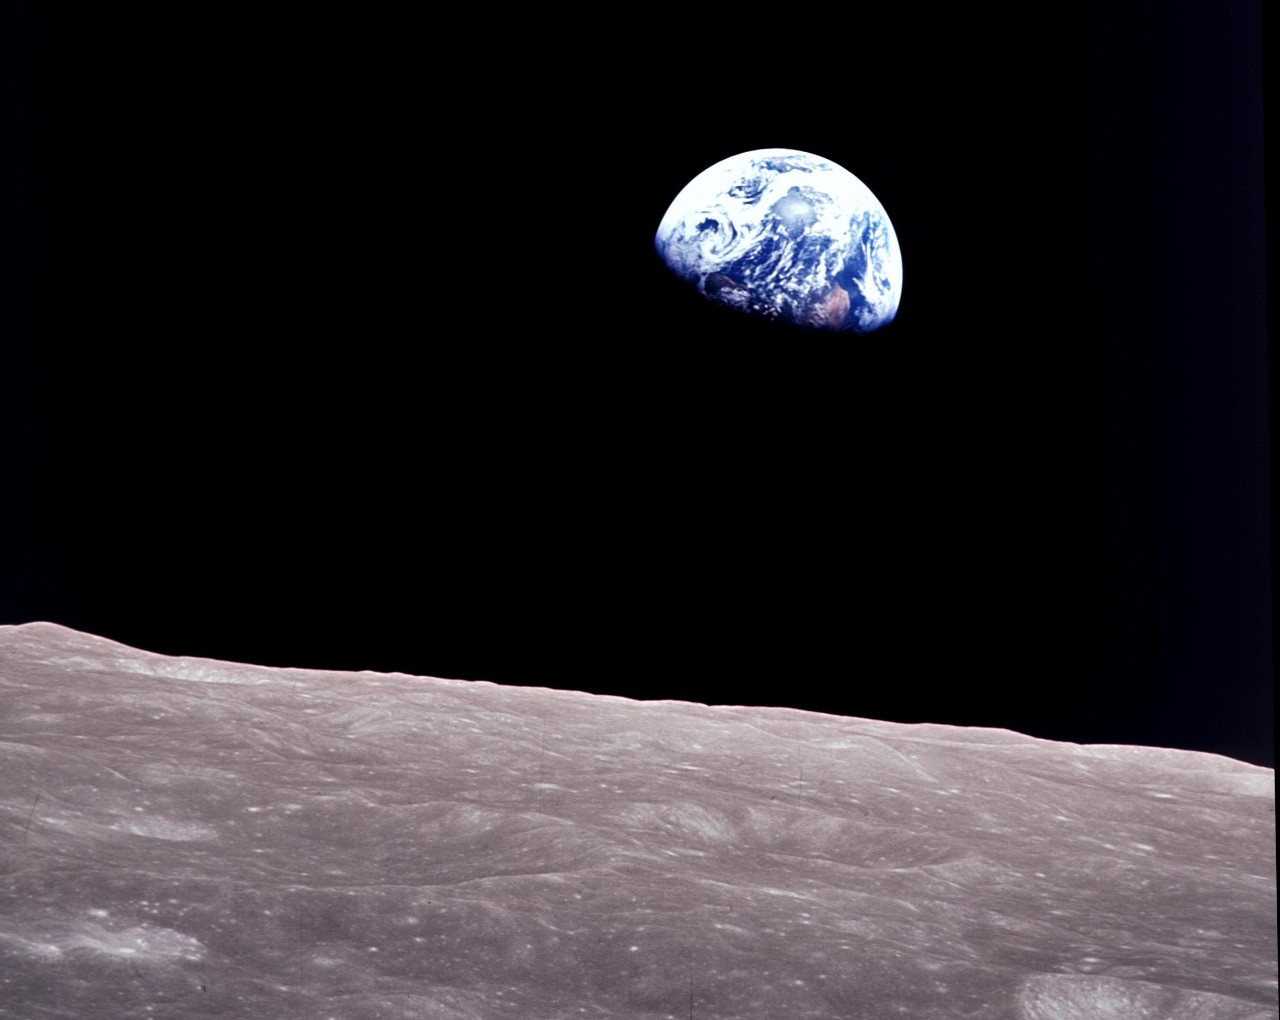 Picture courtesy of NASA / Bill Anders (public domain)